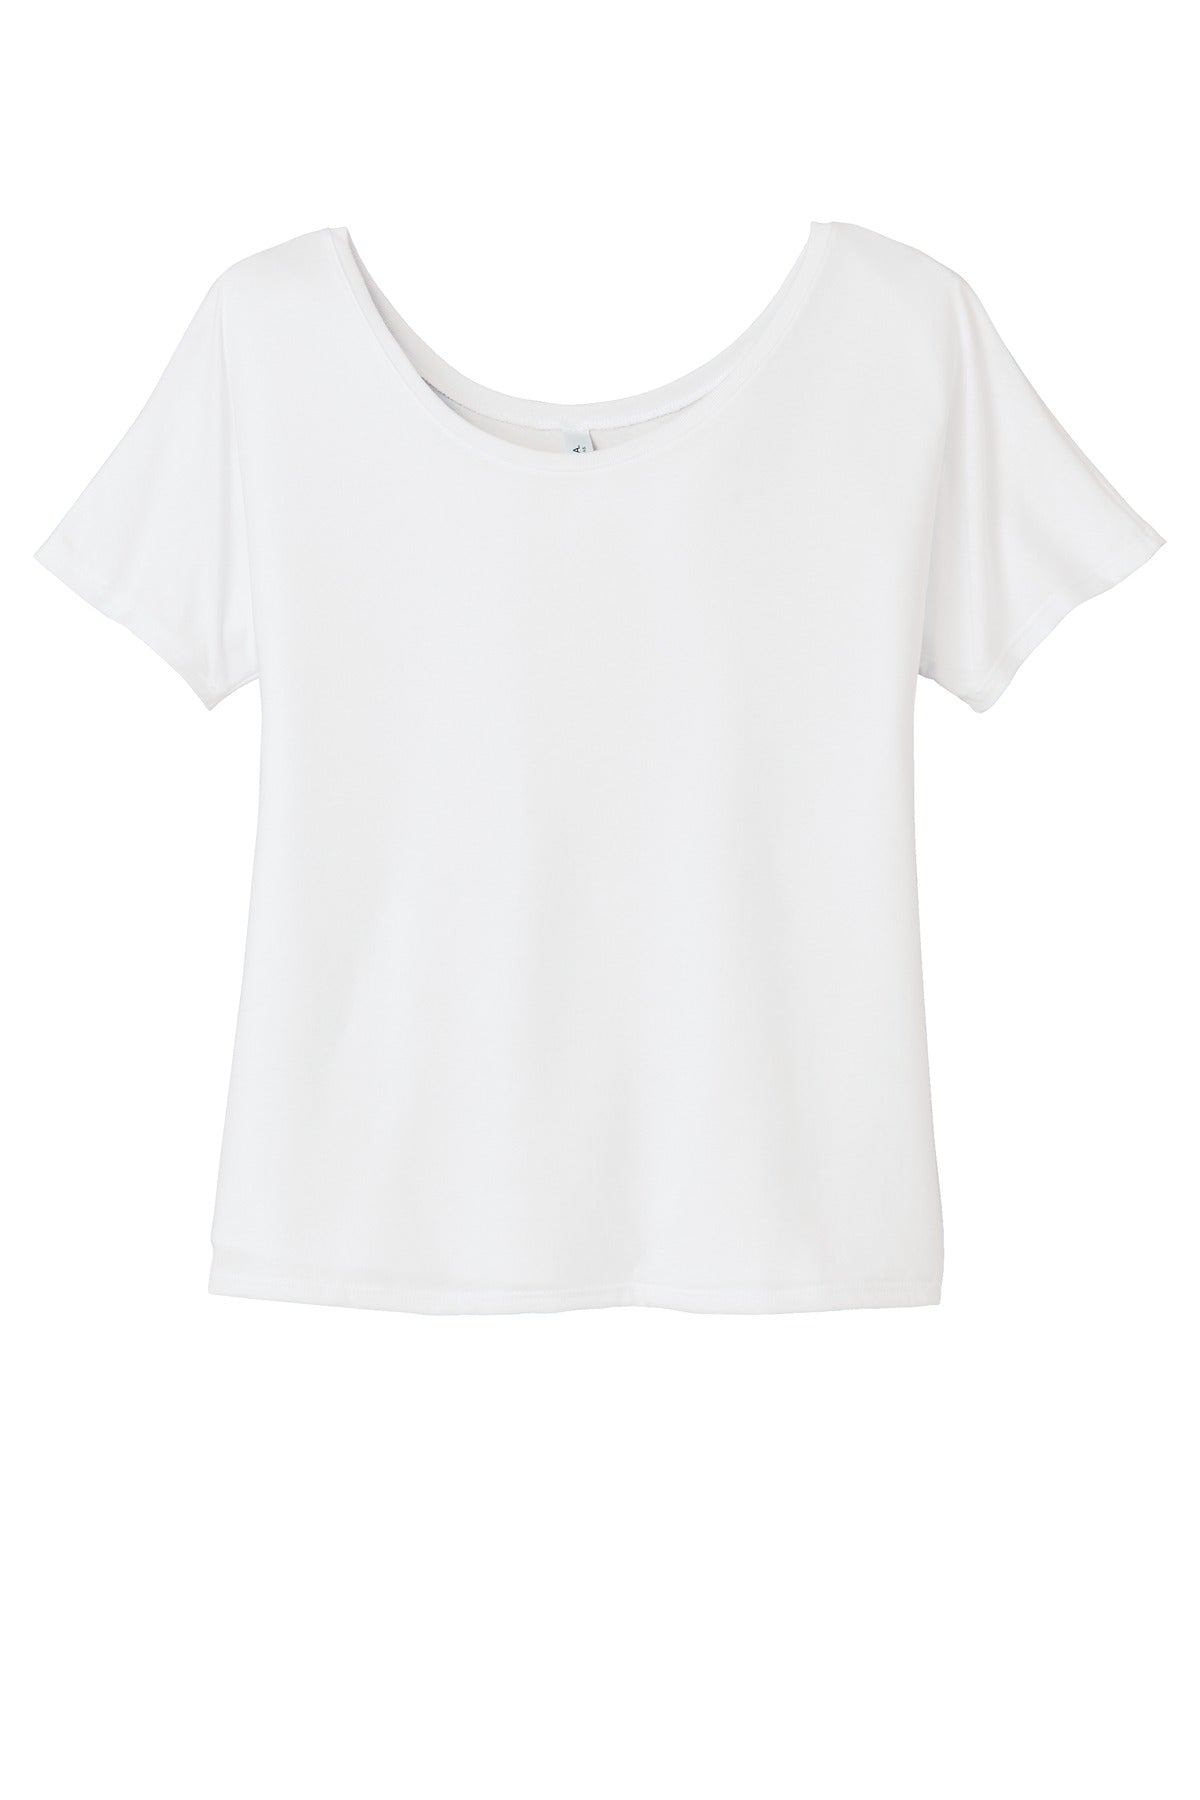 BELLA+CANVAS Women's Slouchy Tee. BC8816 - BT Imprintables Shirts